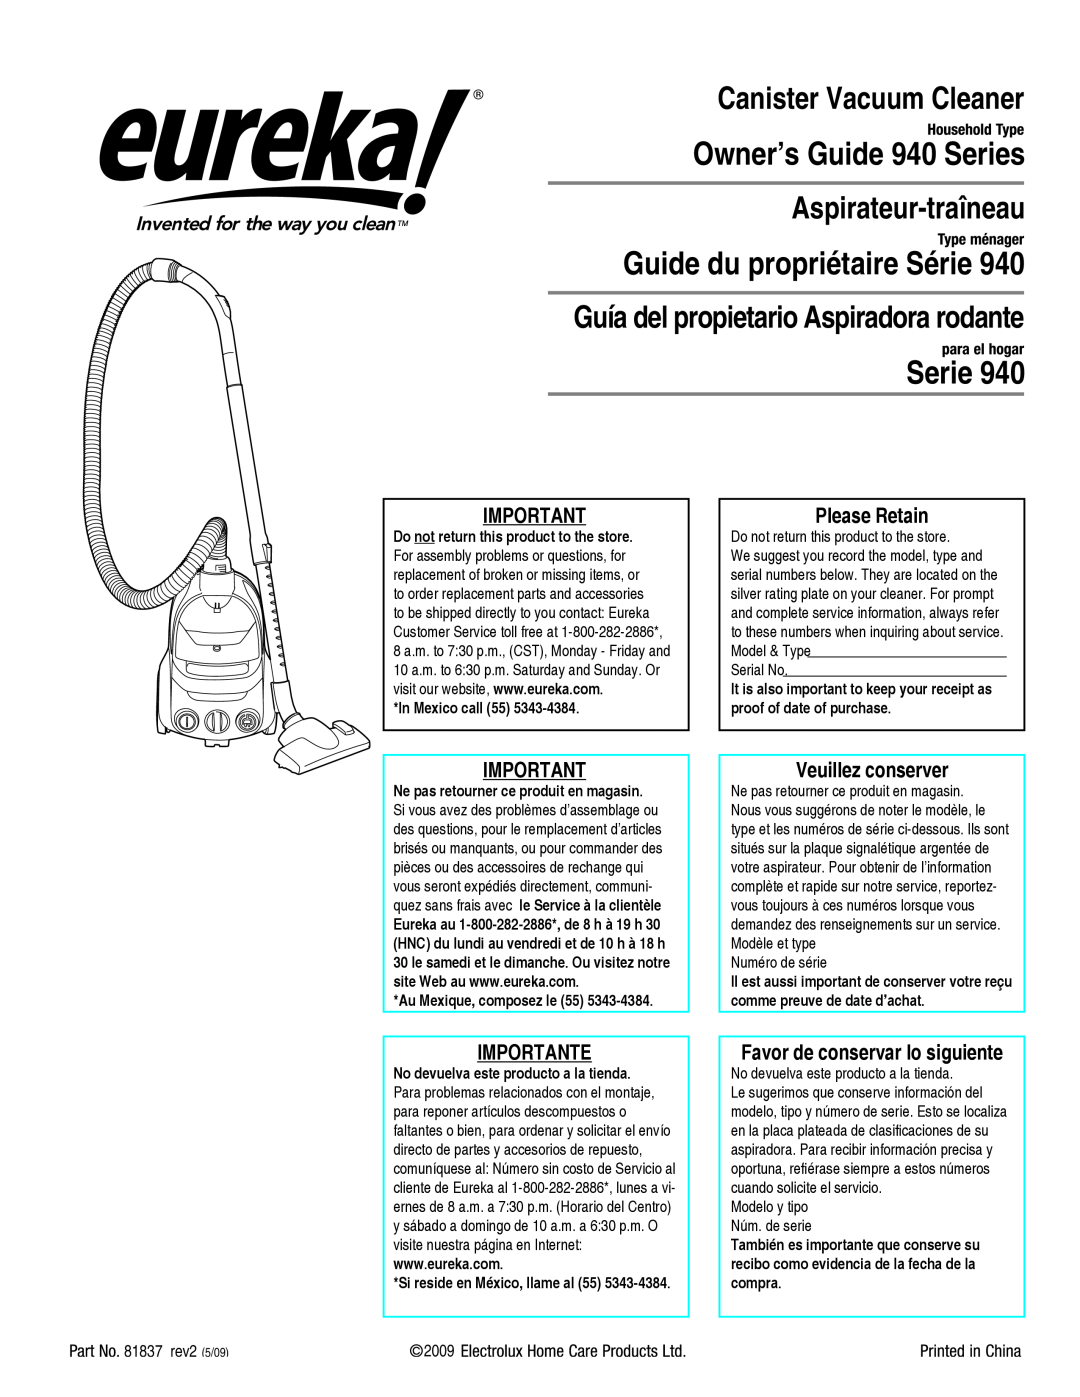 Eureka! Tents 940 manual Guía del propietario Aspiradora rodante, Please Retain, Importante, Veuillez conserver, Serie 